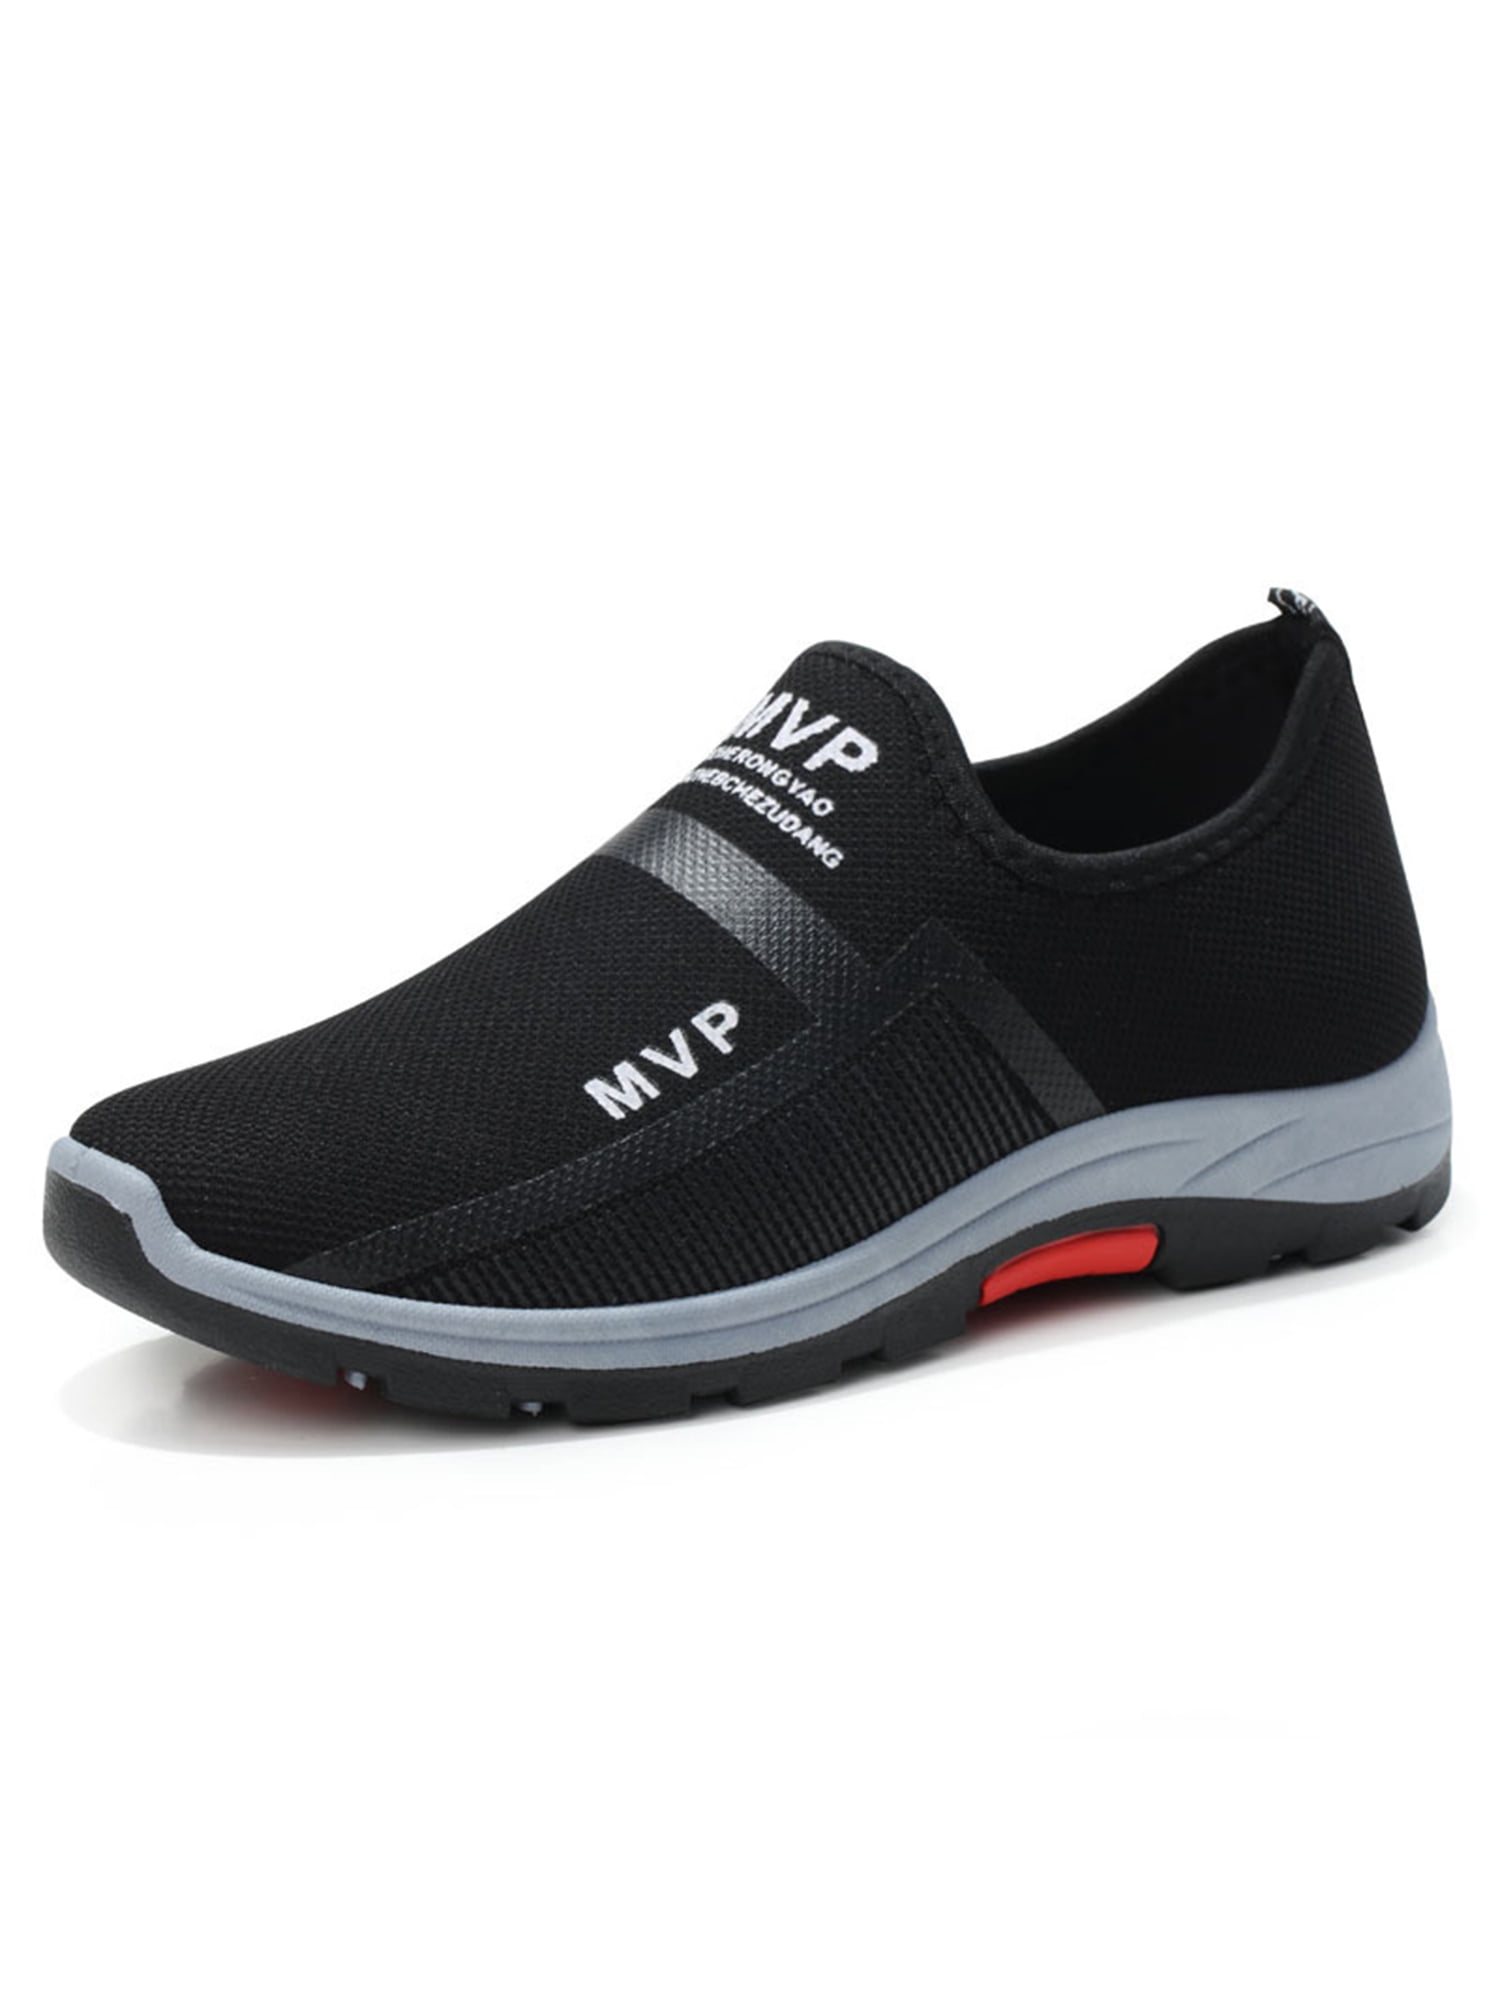 Harsuny Men Sports Comfort Walking Shoe Breathable Low Top Sneakers ...